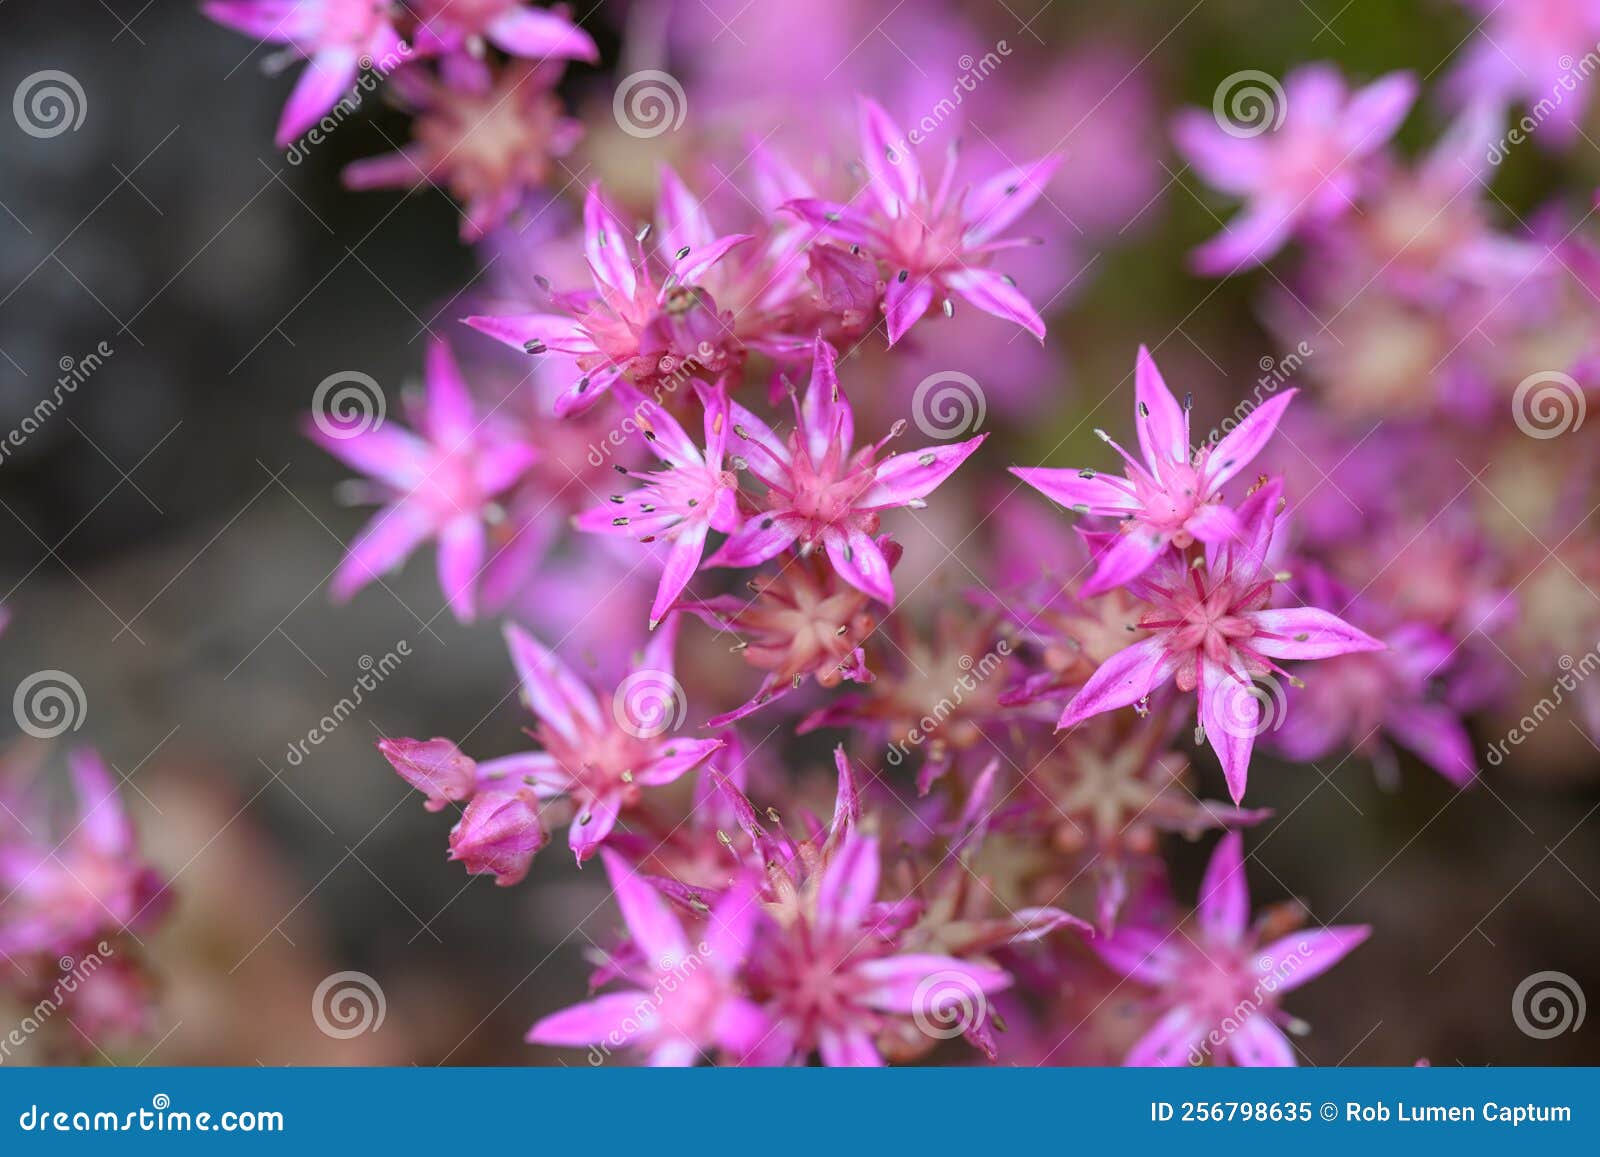 blunt-leaved stonecrop sedum obtusifolium, star-d, bright pink flowers